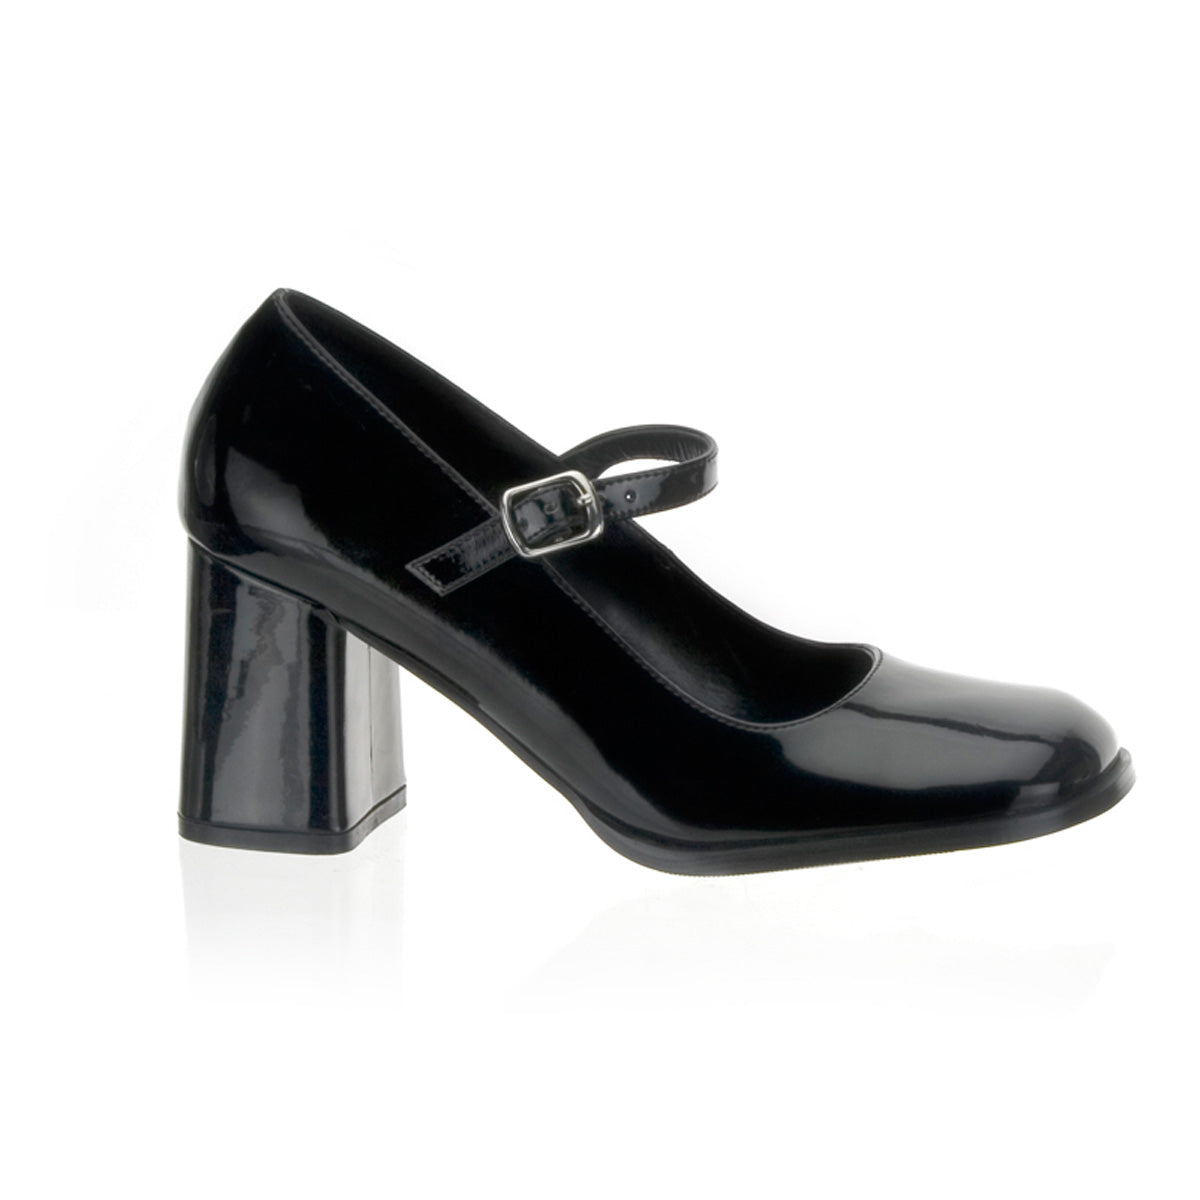 GOGO-50 Pleasers Funtasma 3 Inch Heel Black Patent Women's Sexy Shoes